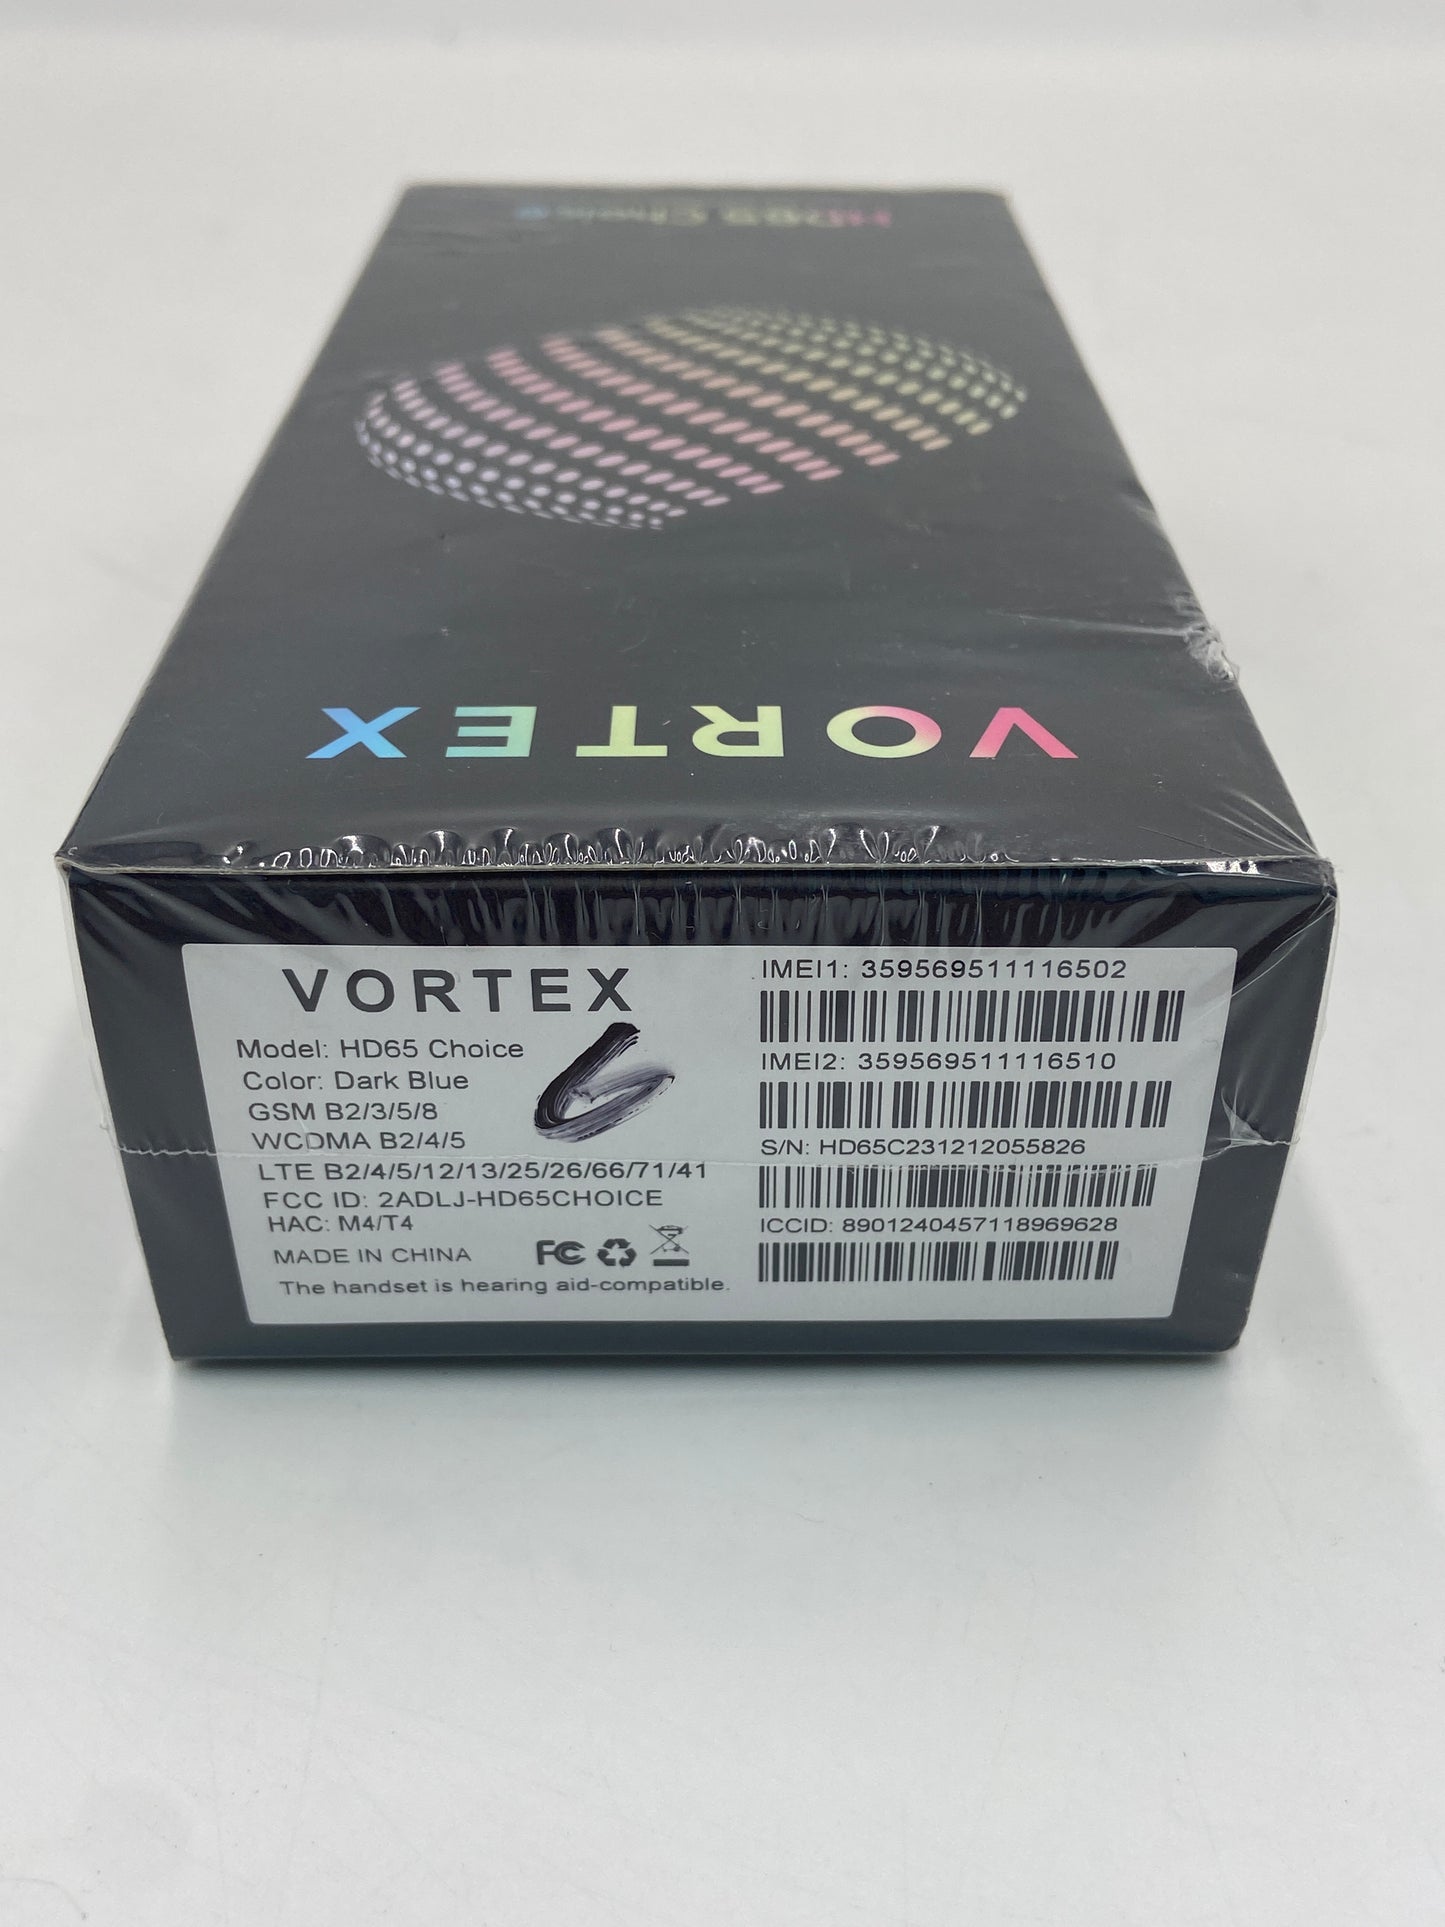 New T-Mobile Vortex HD65 Choice 32GB Dark Blue Clean